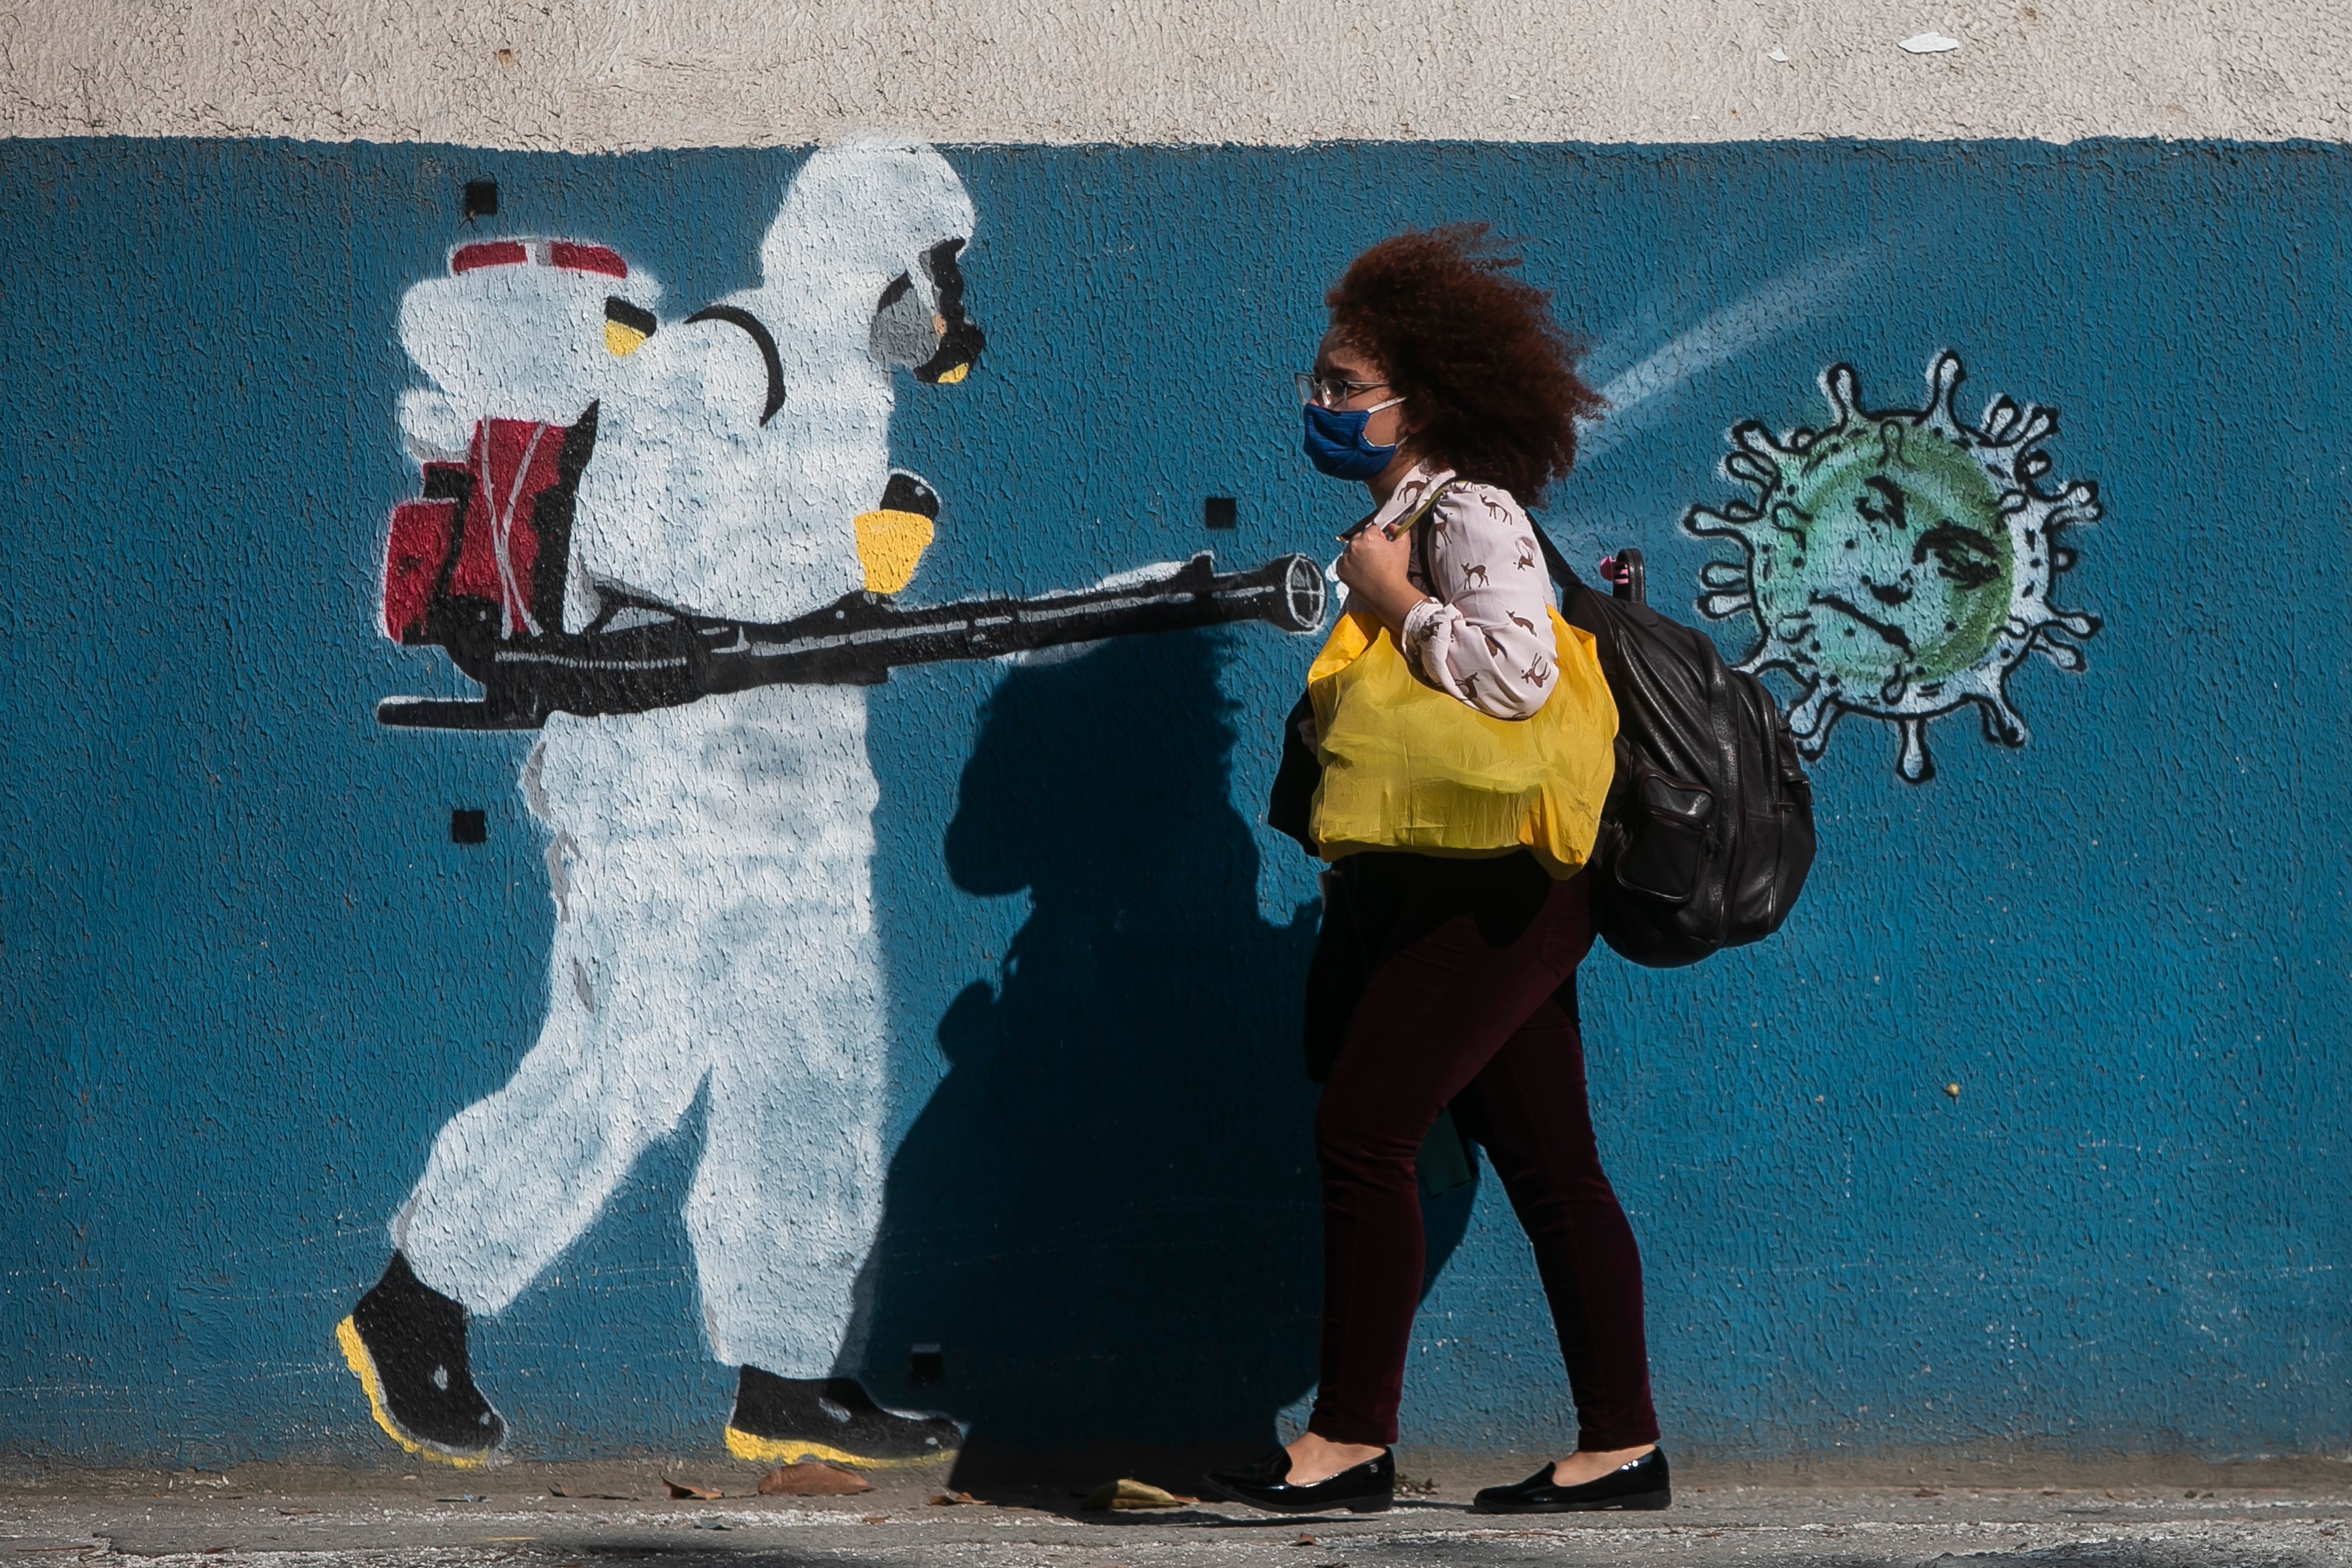 Graffiti Art Around the City of Rio de Janeiro Amidst the Coronavirus (COVID - 19) Pandemic